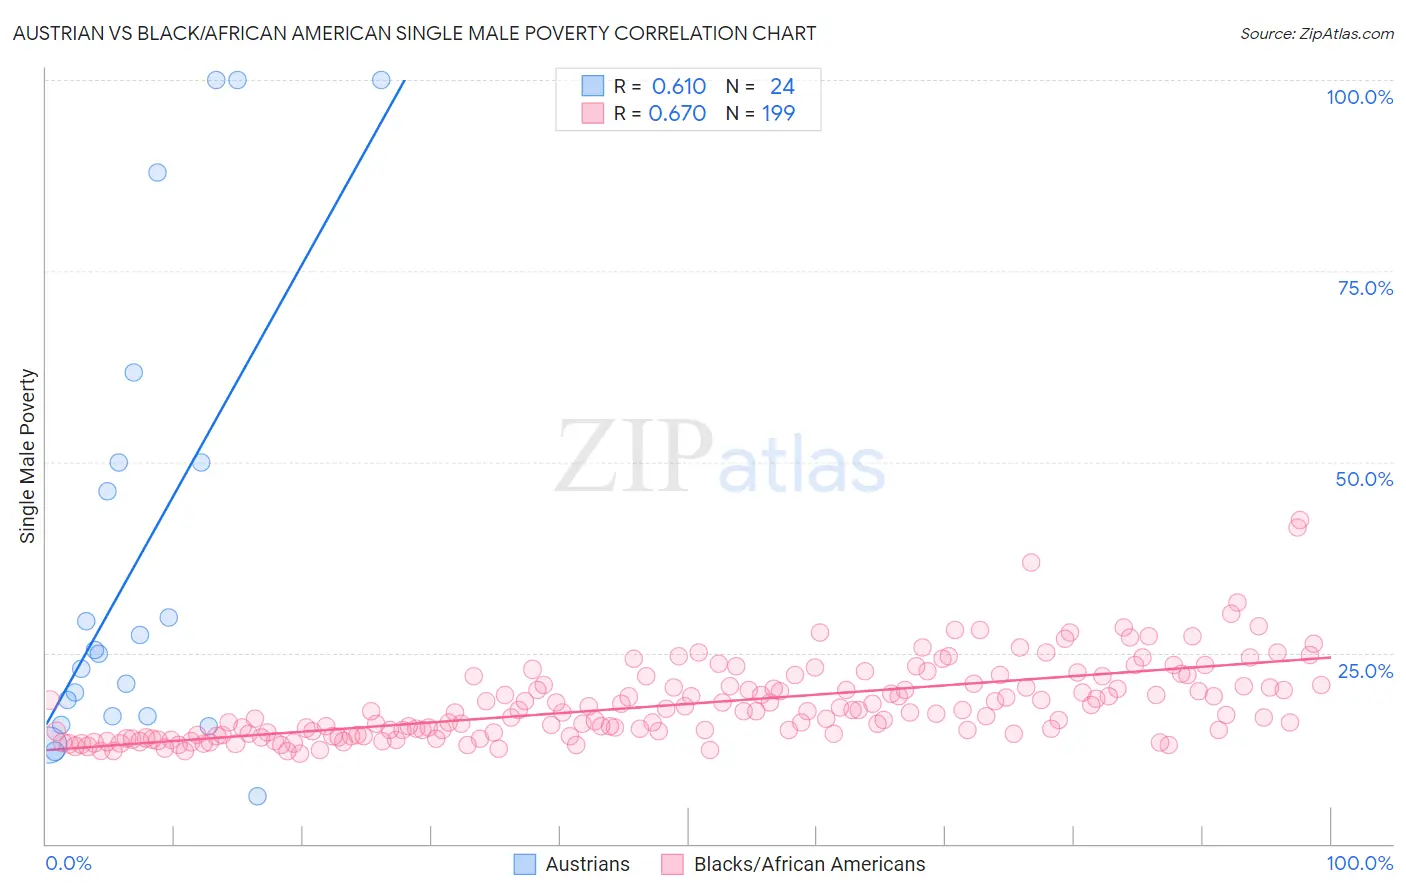 Austrian vs Black/African American Single Male Poverty